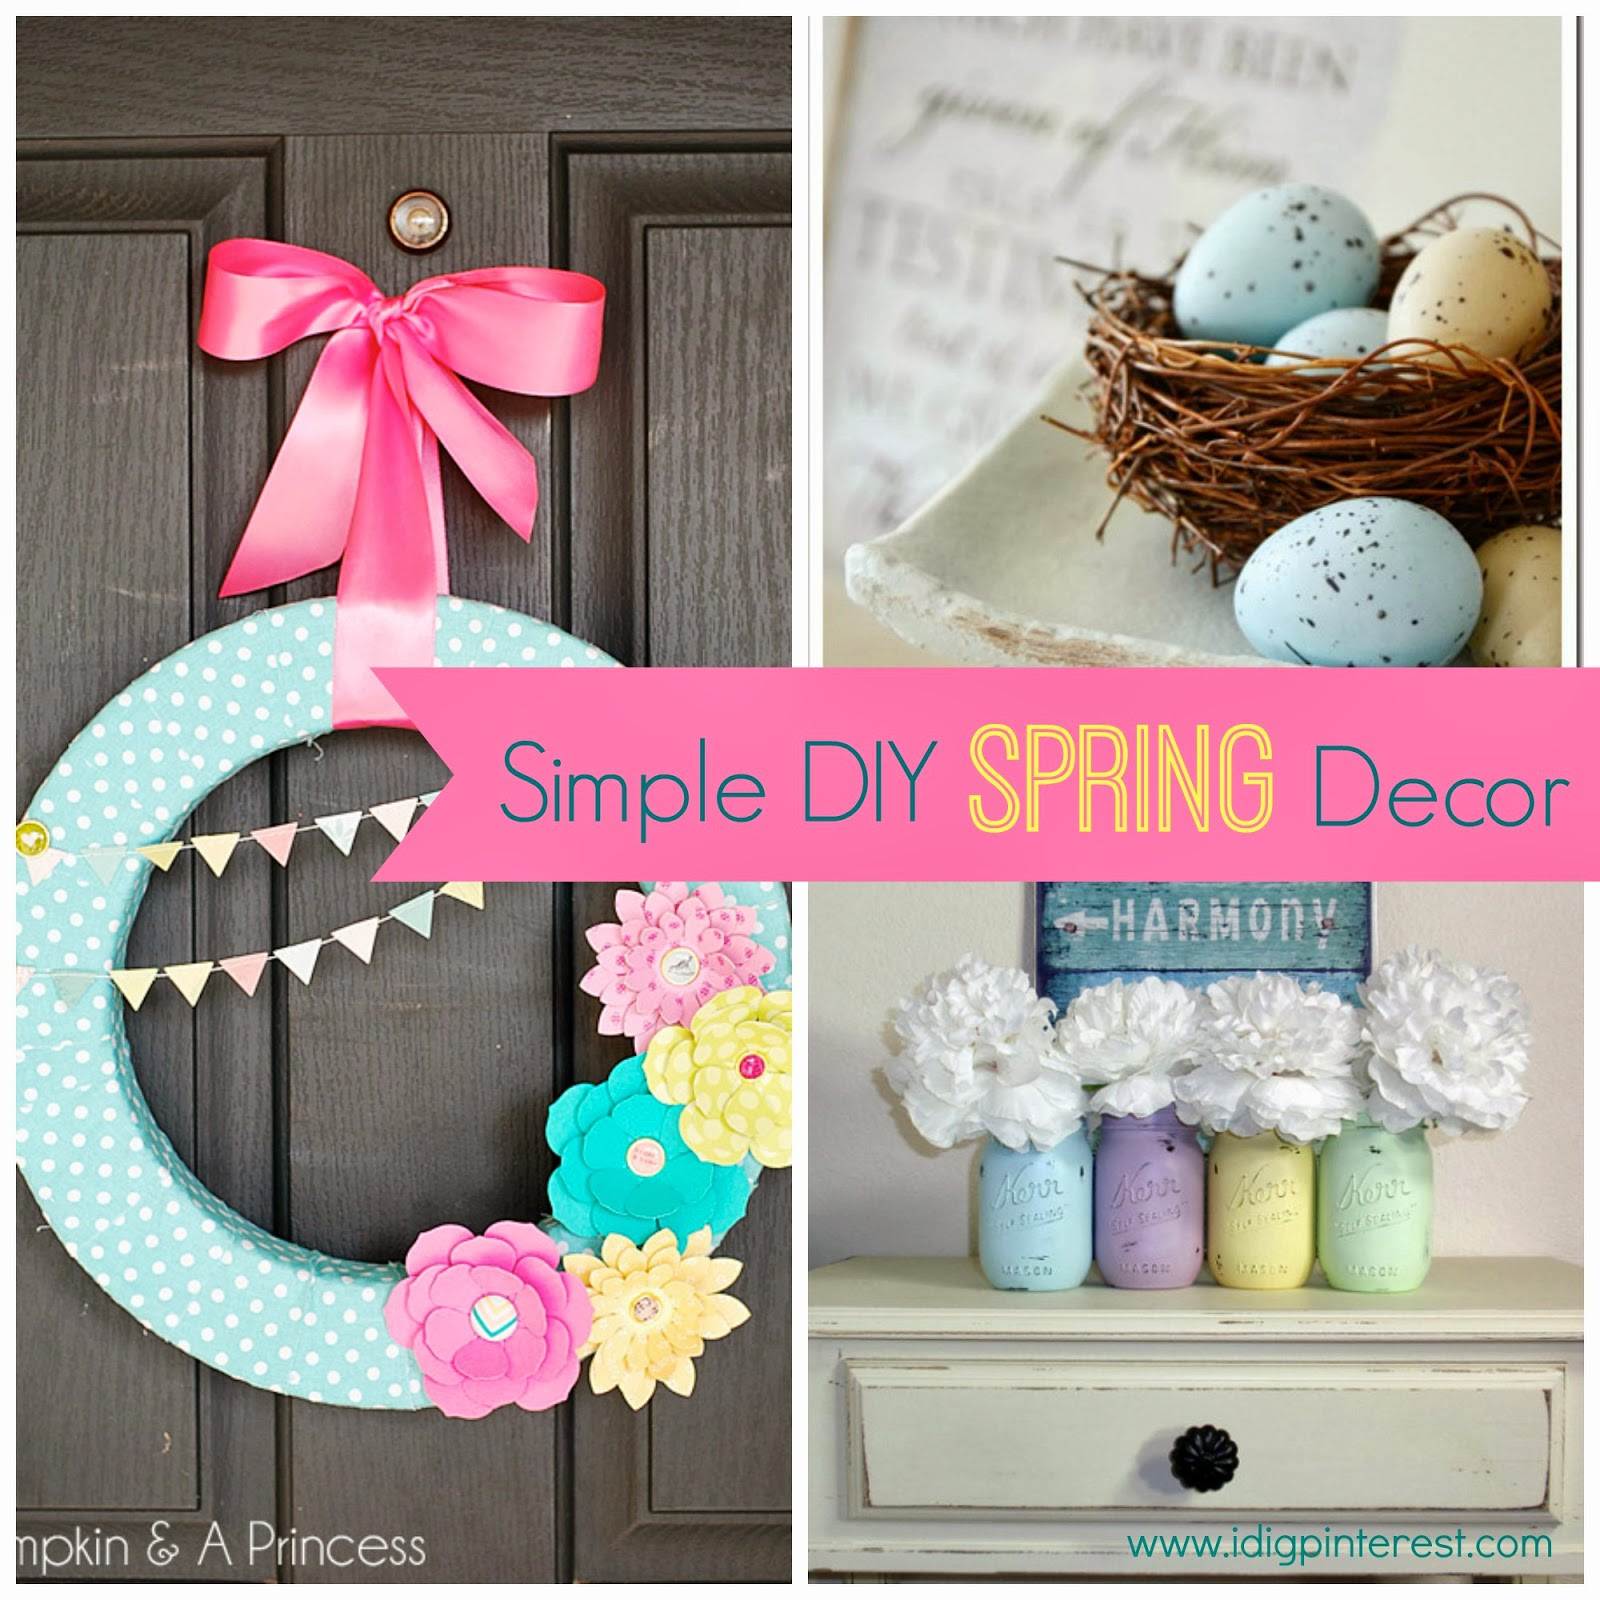 DIY Decorations Pinterest
 Simple DIY Spring Decor Ideas I Dig Pinterest